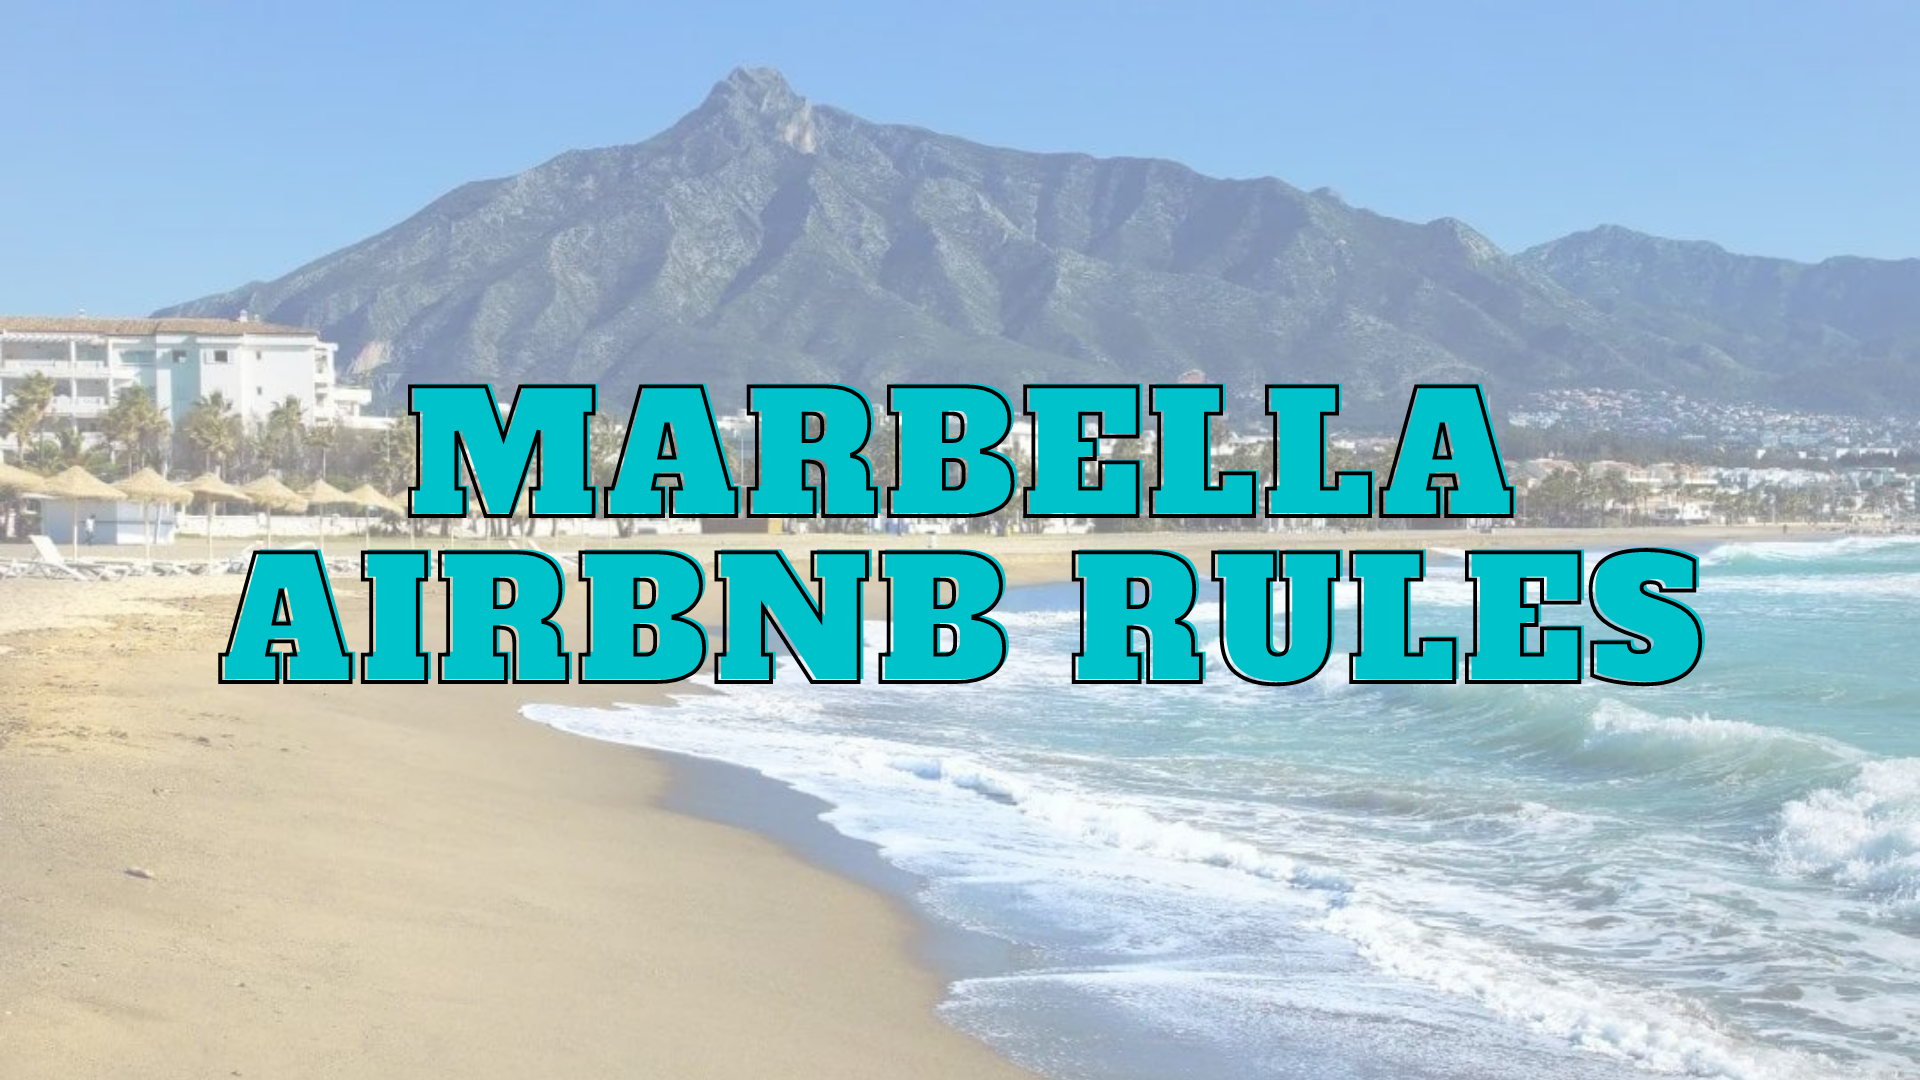 marbella airbnb rules